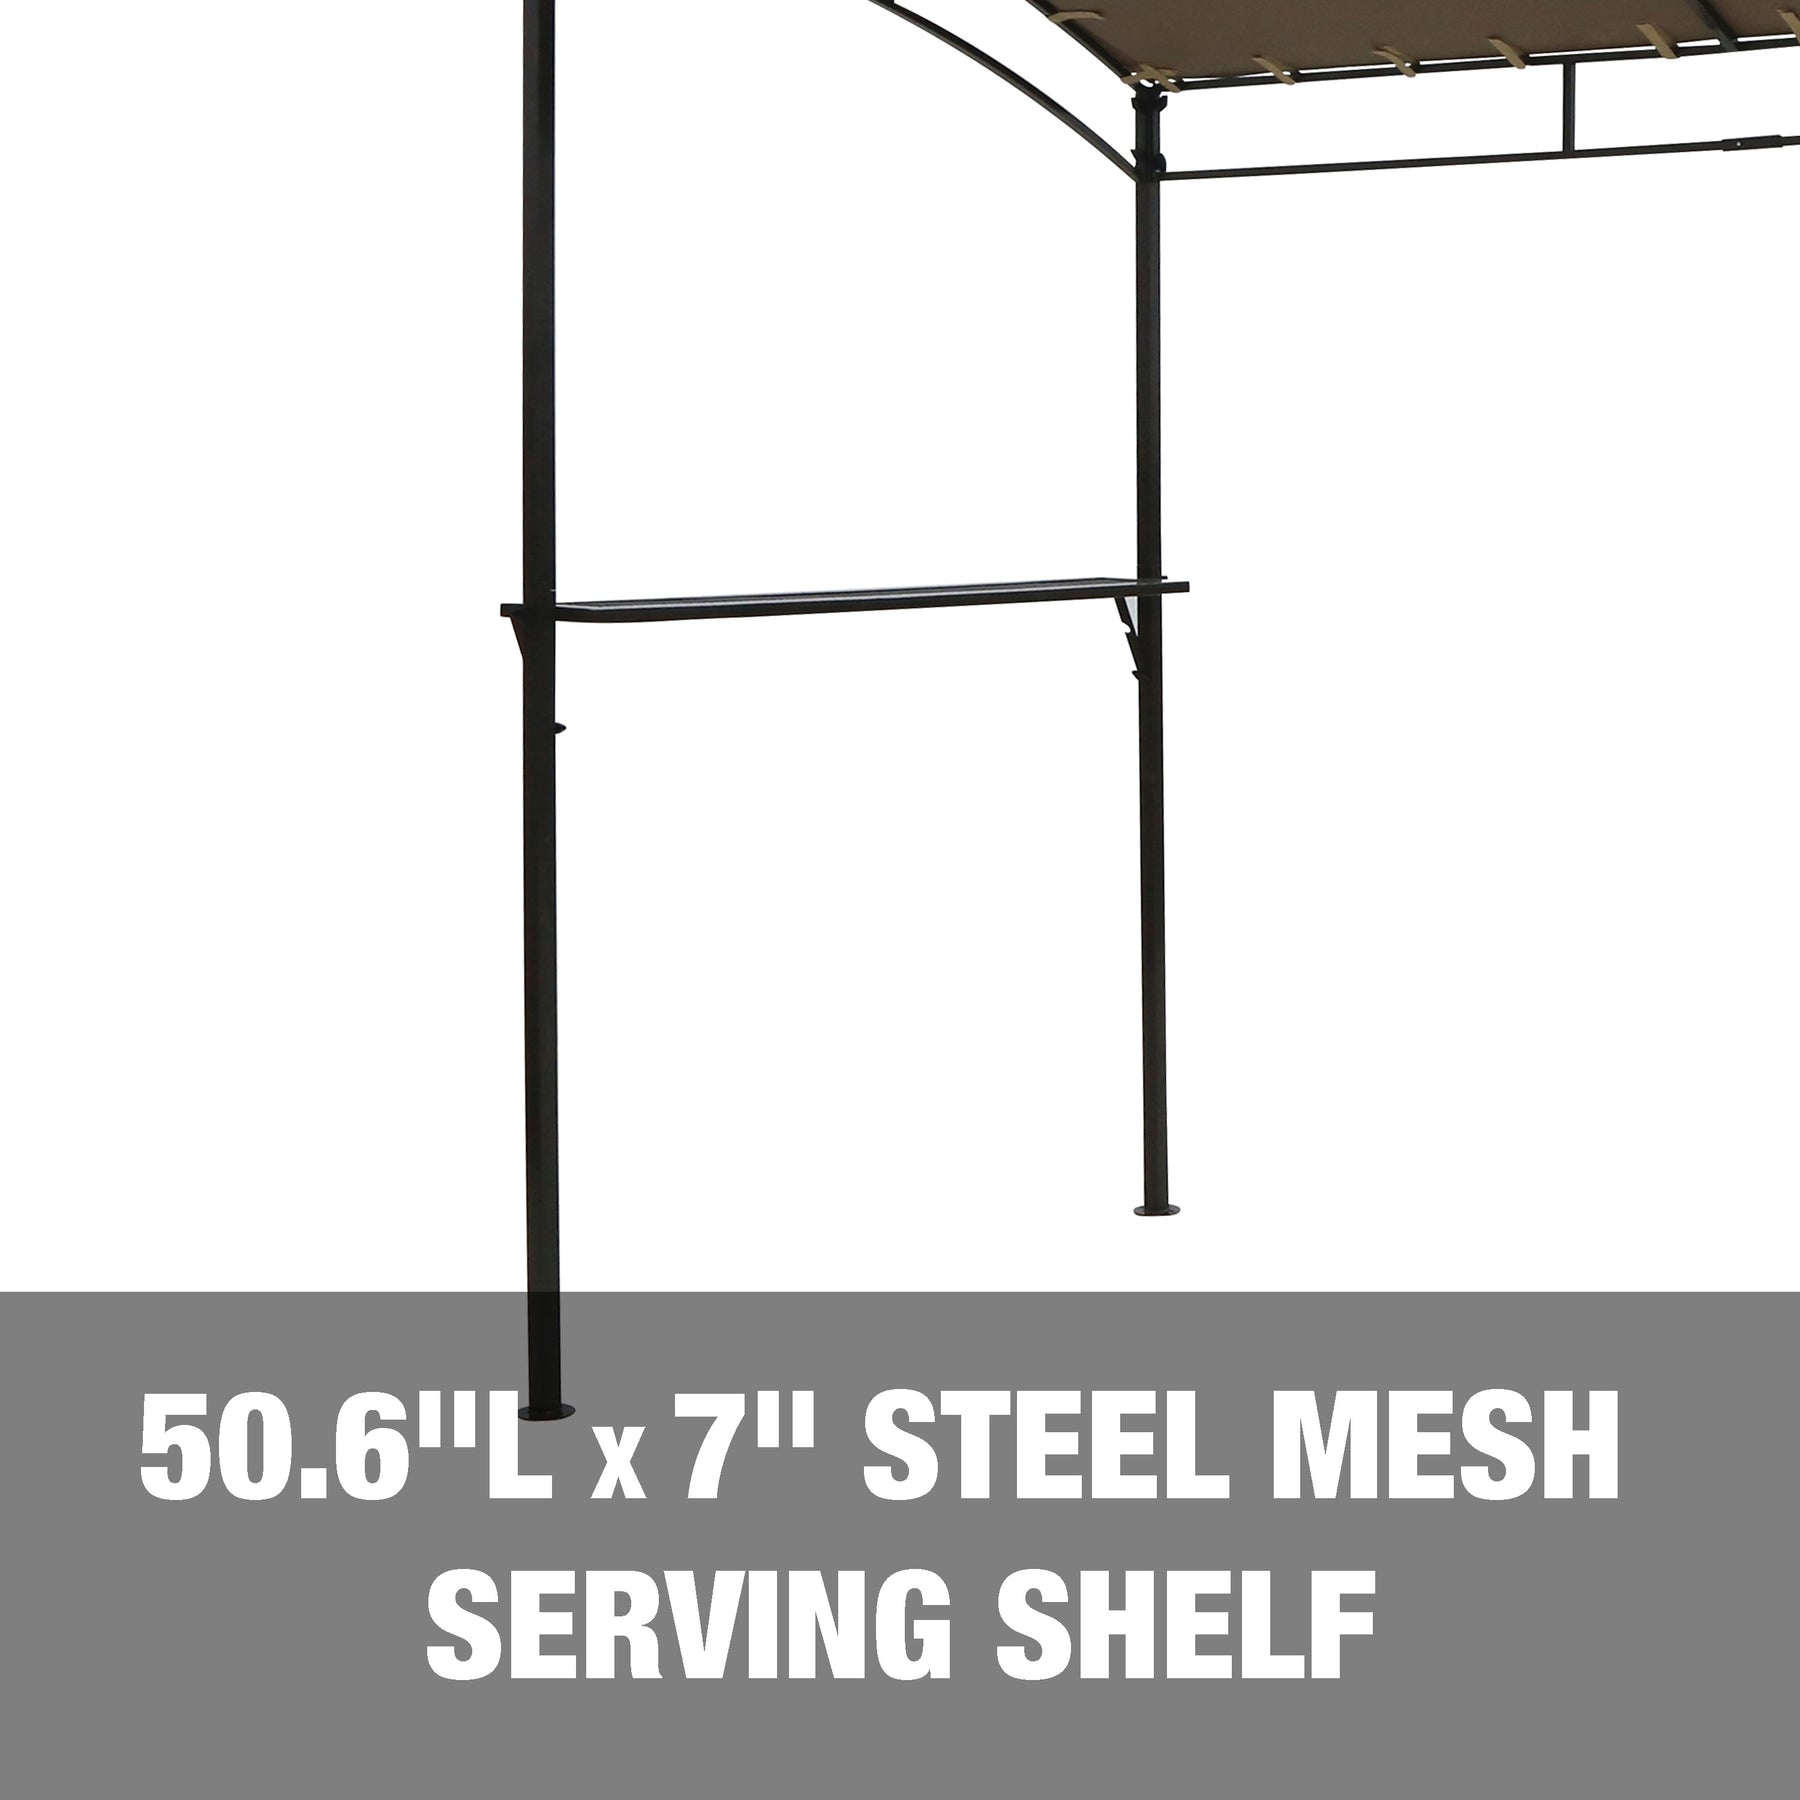 Built-in 50.6 inch long steel mesh serving shelf.